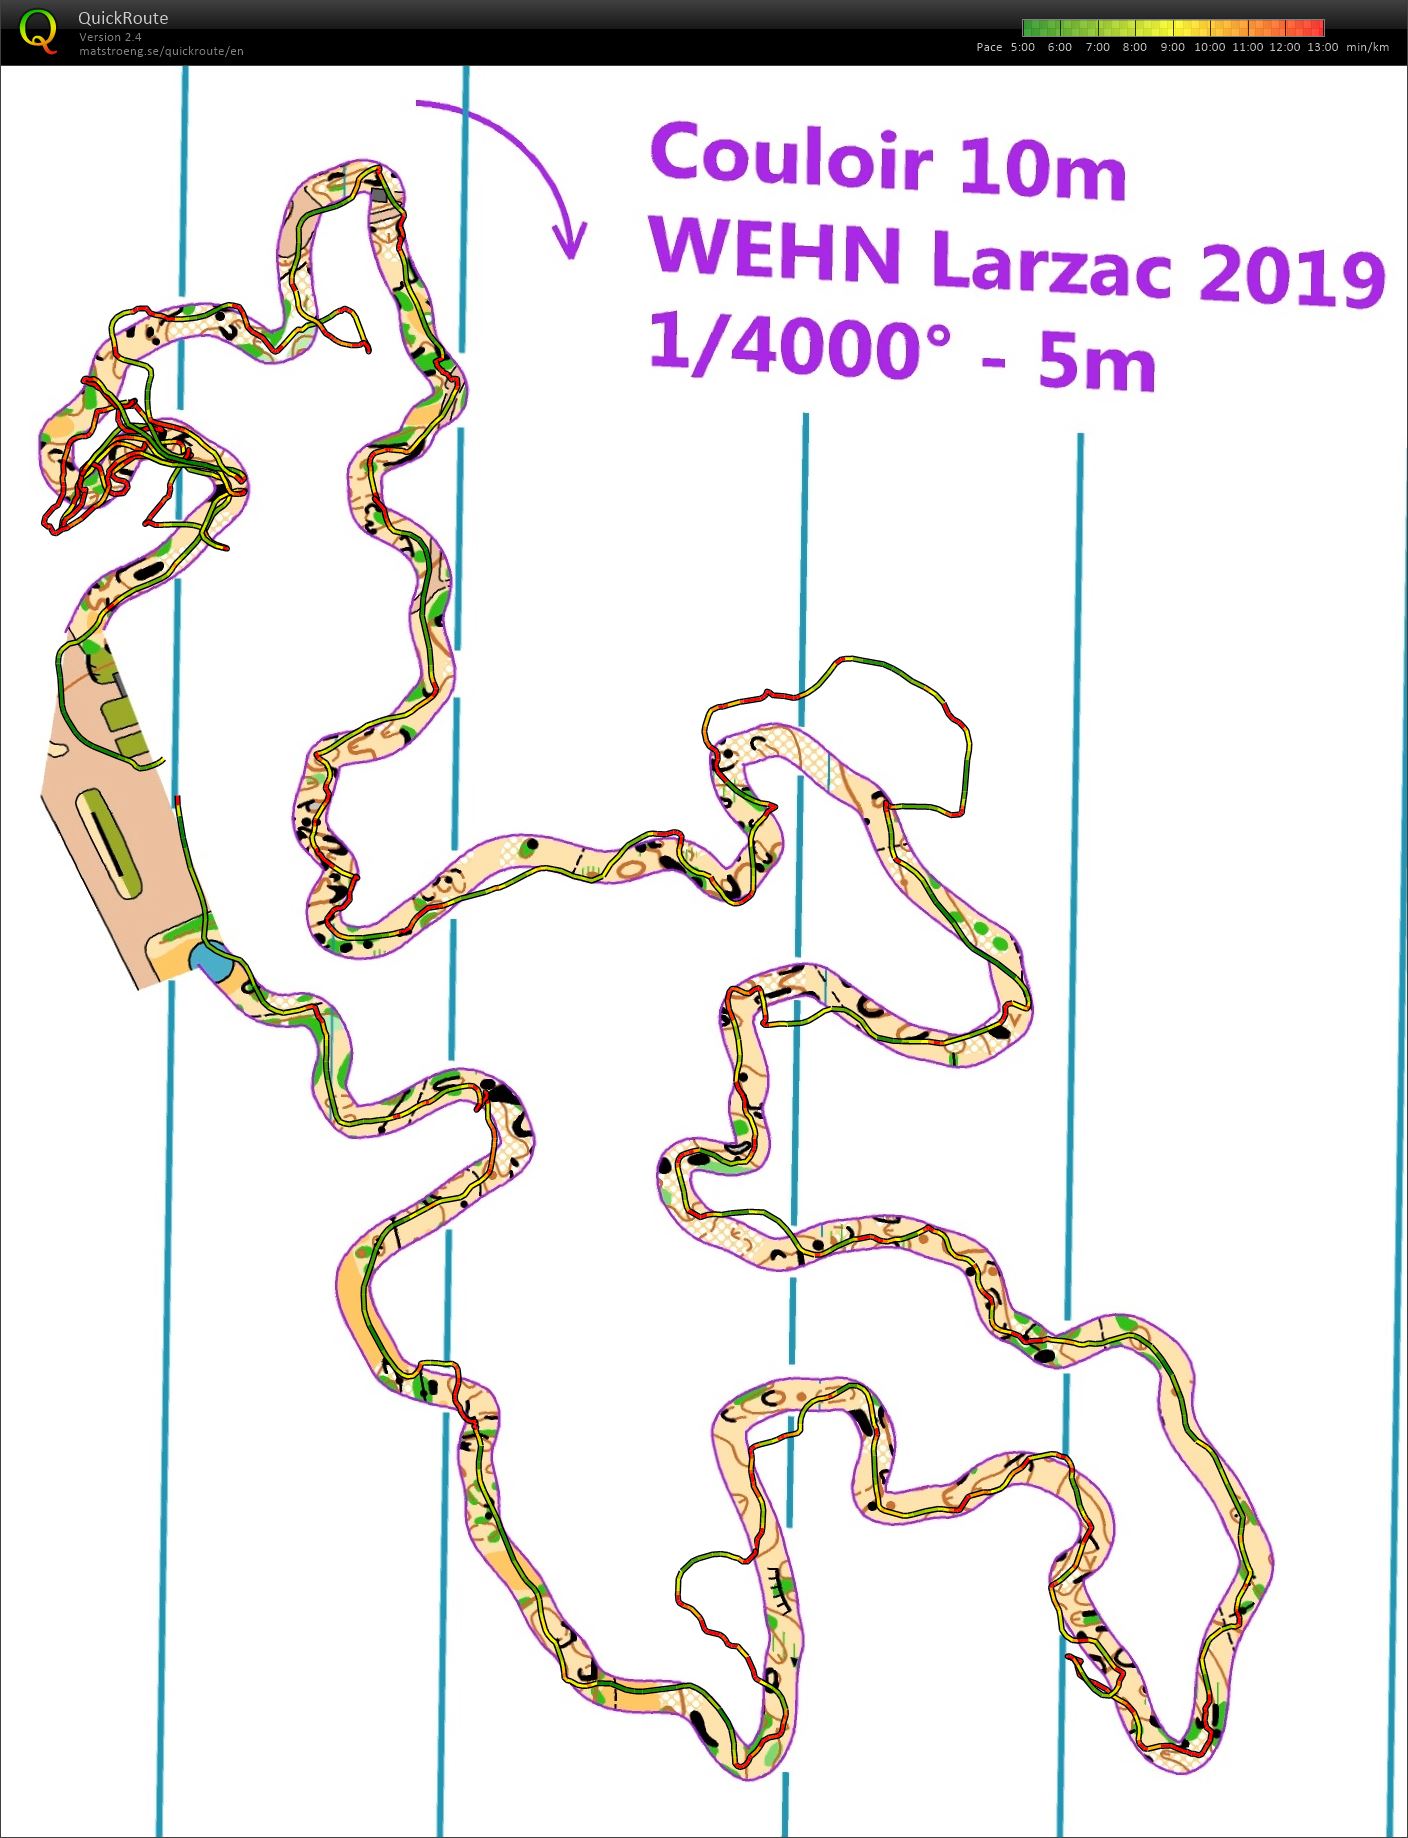 WEHN Larzac Couloir 10m (2018-12-08)